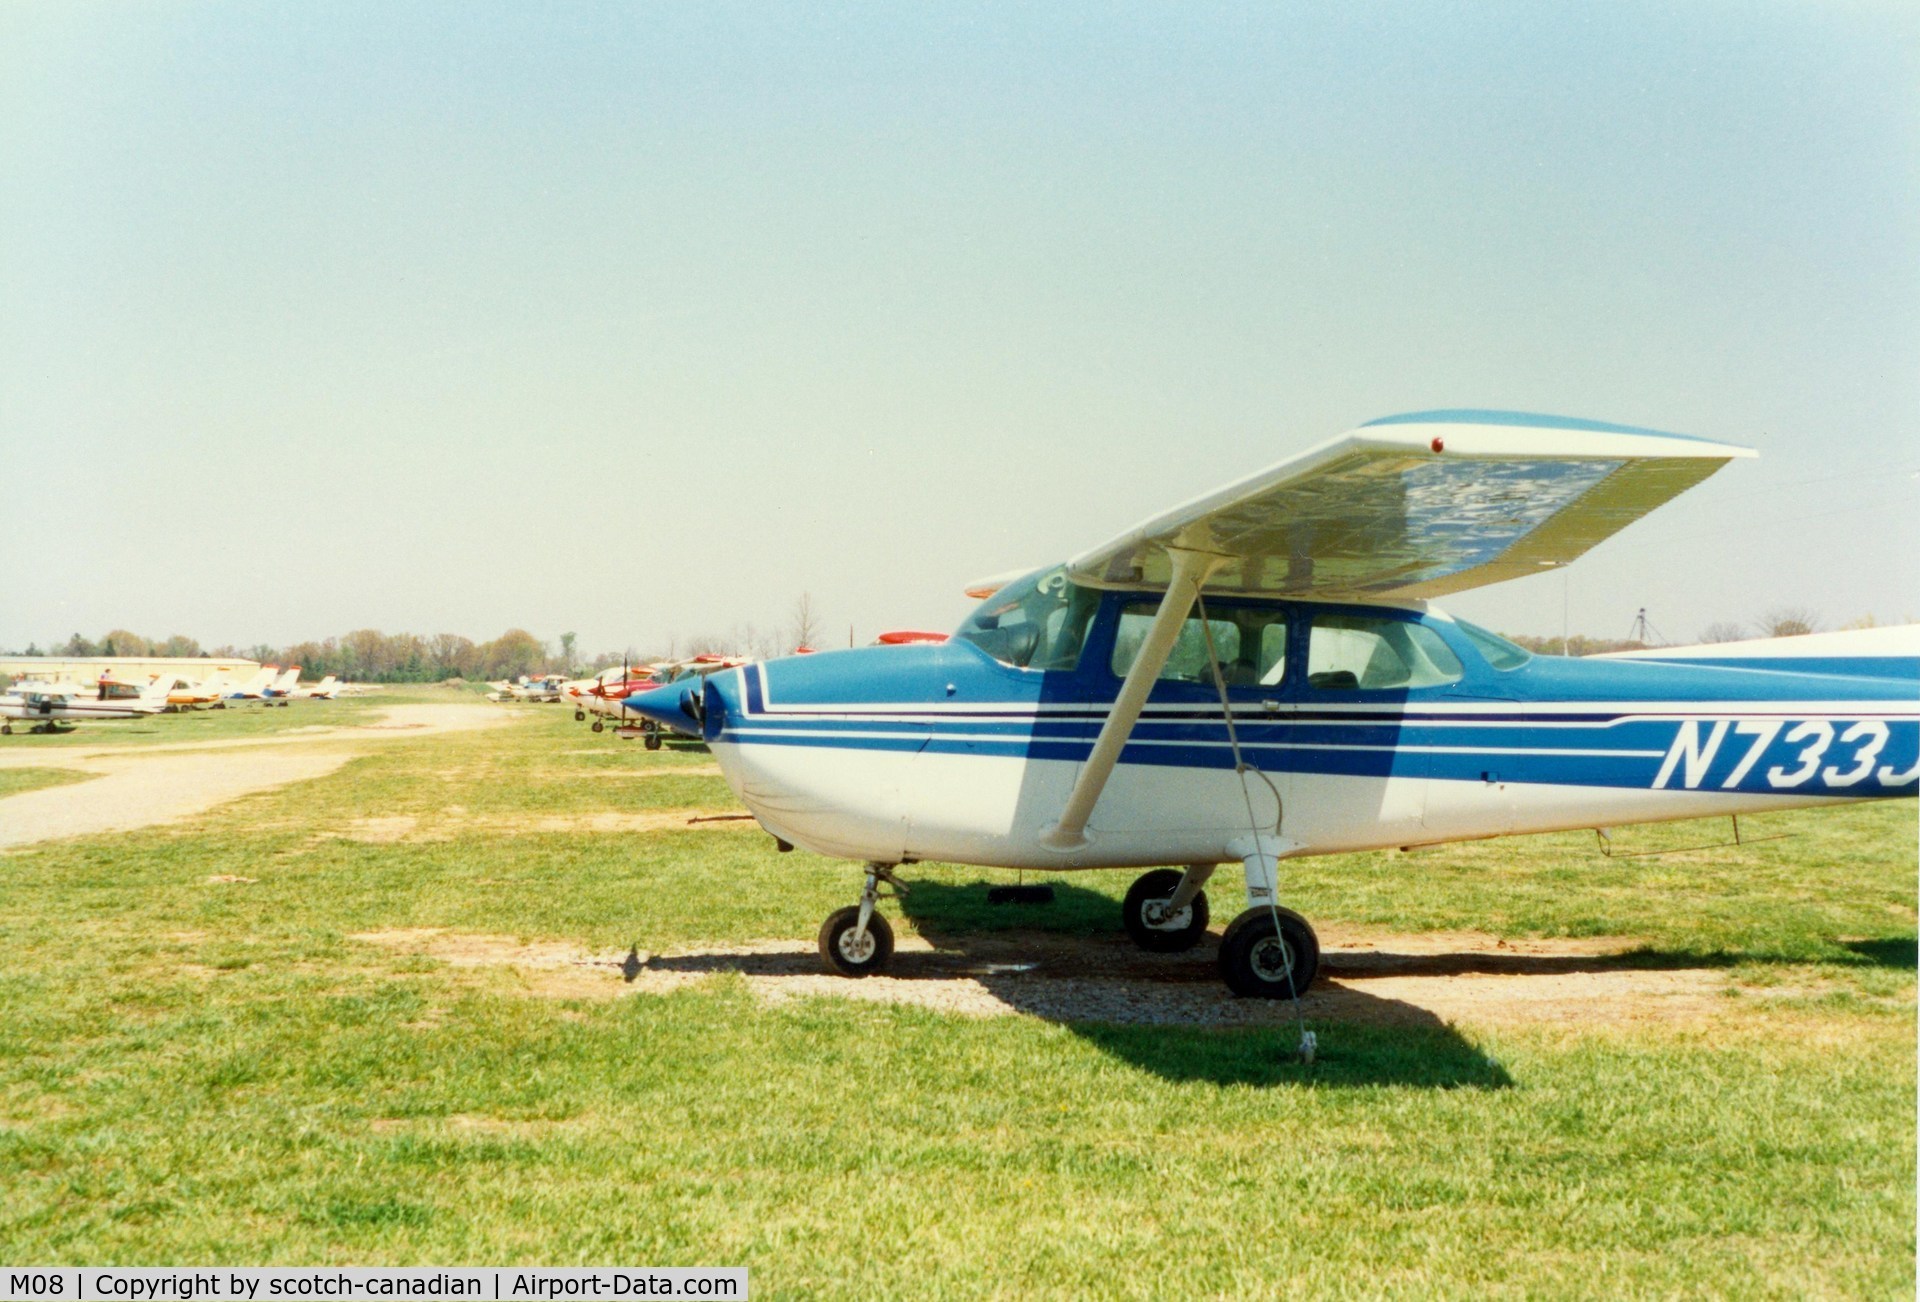 William L. Whitehurst Field Airport (M08) - Flight Line at Bolivar Aviation, William L. Whitehurst Field, Bolivar, TN - May 1989